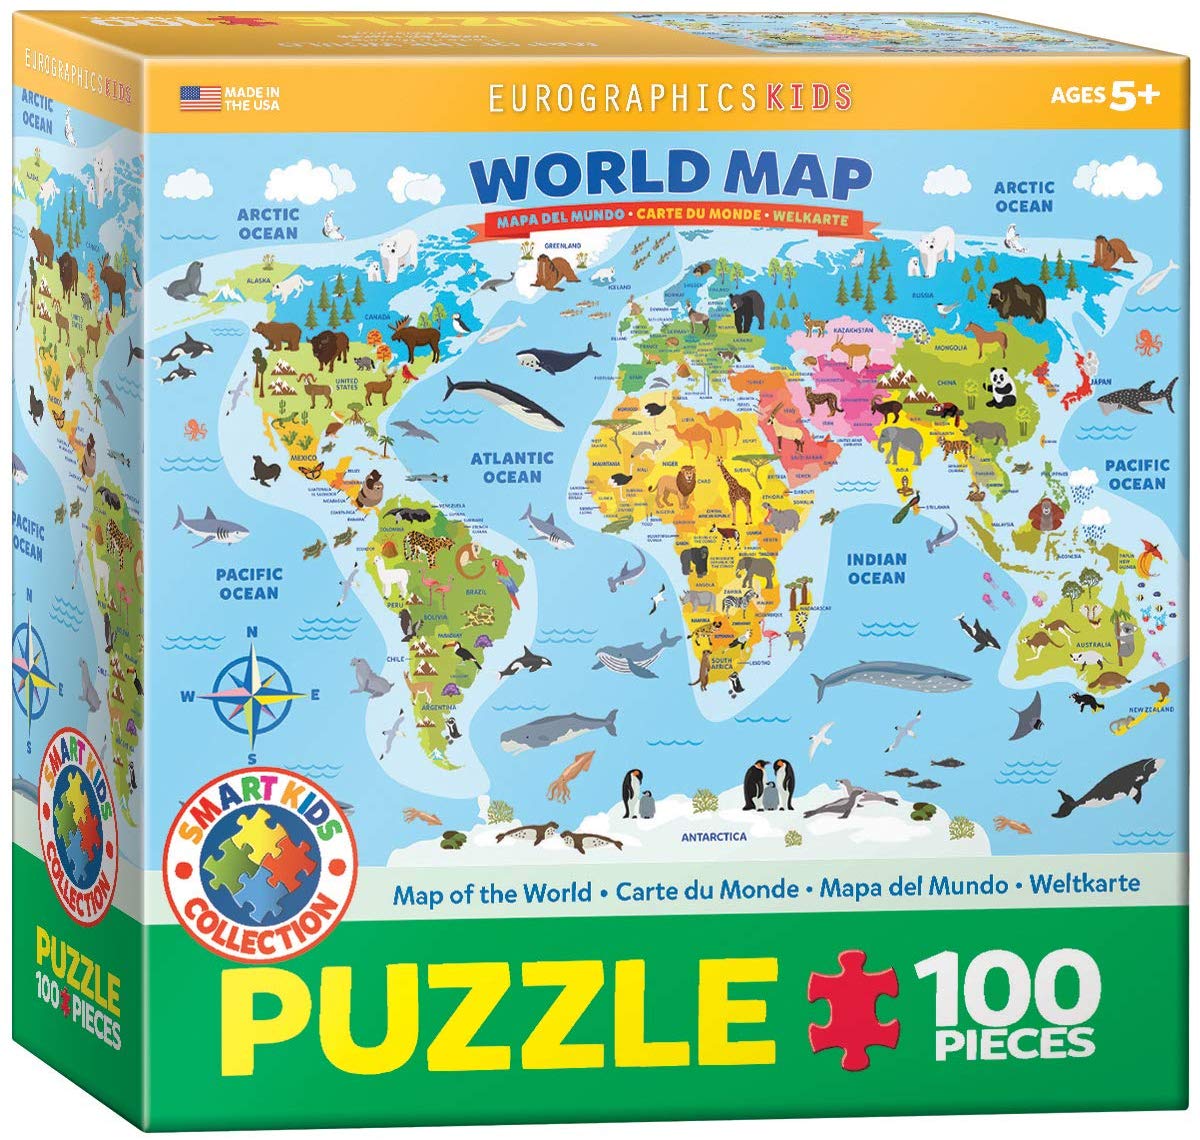 World Map Illustrated Educational Jigsaw Puzzle